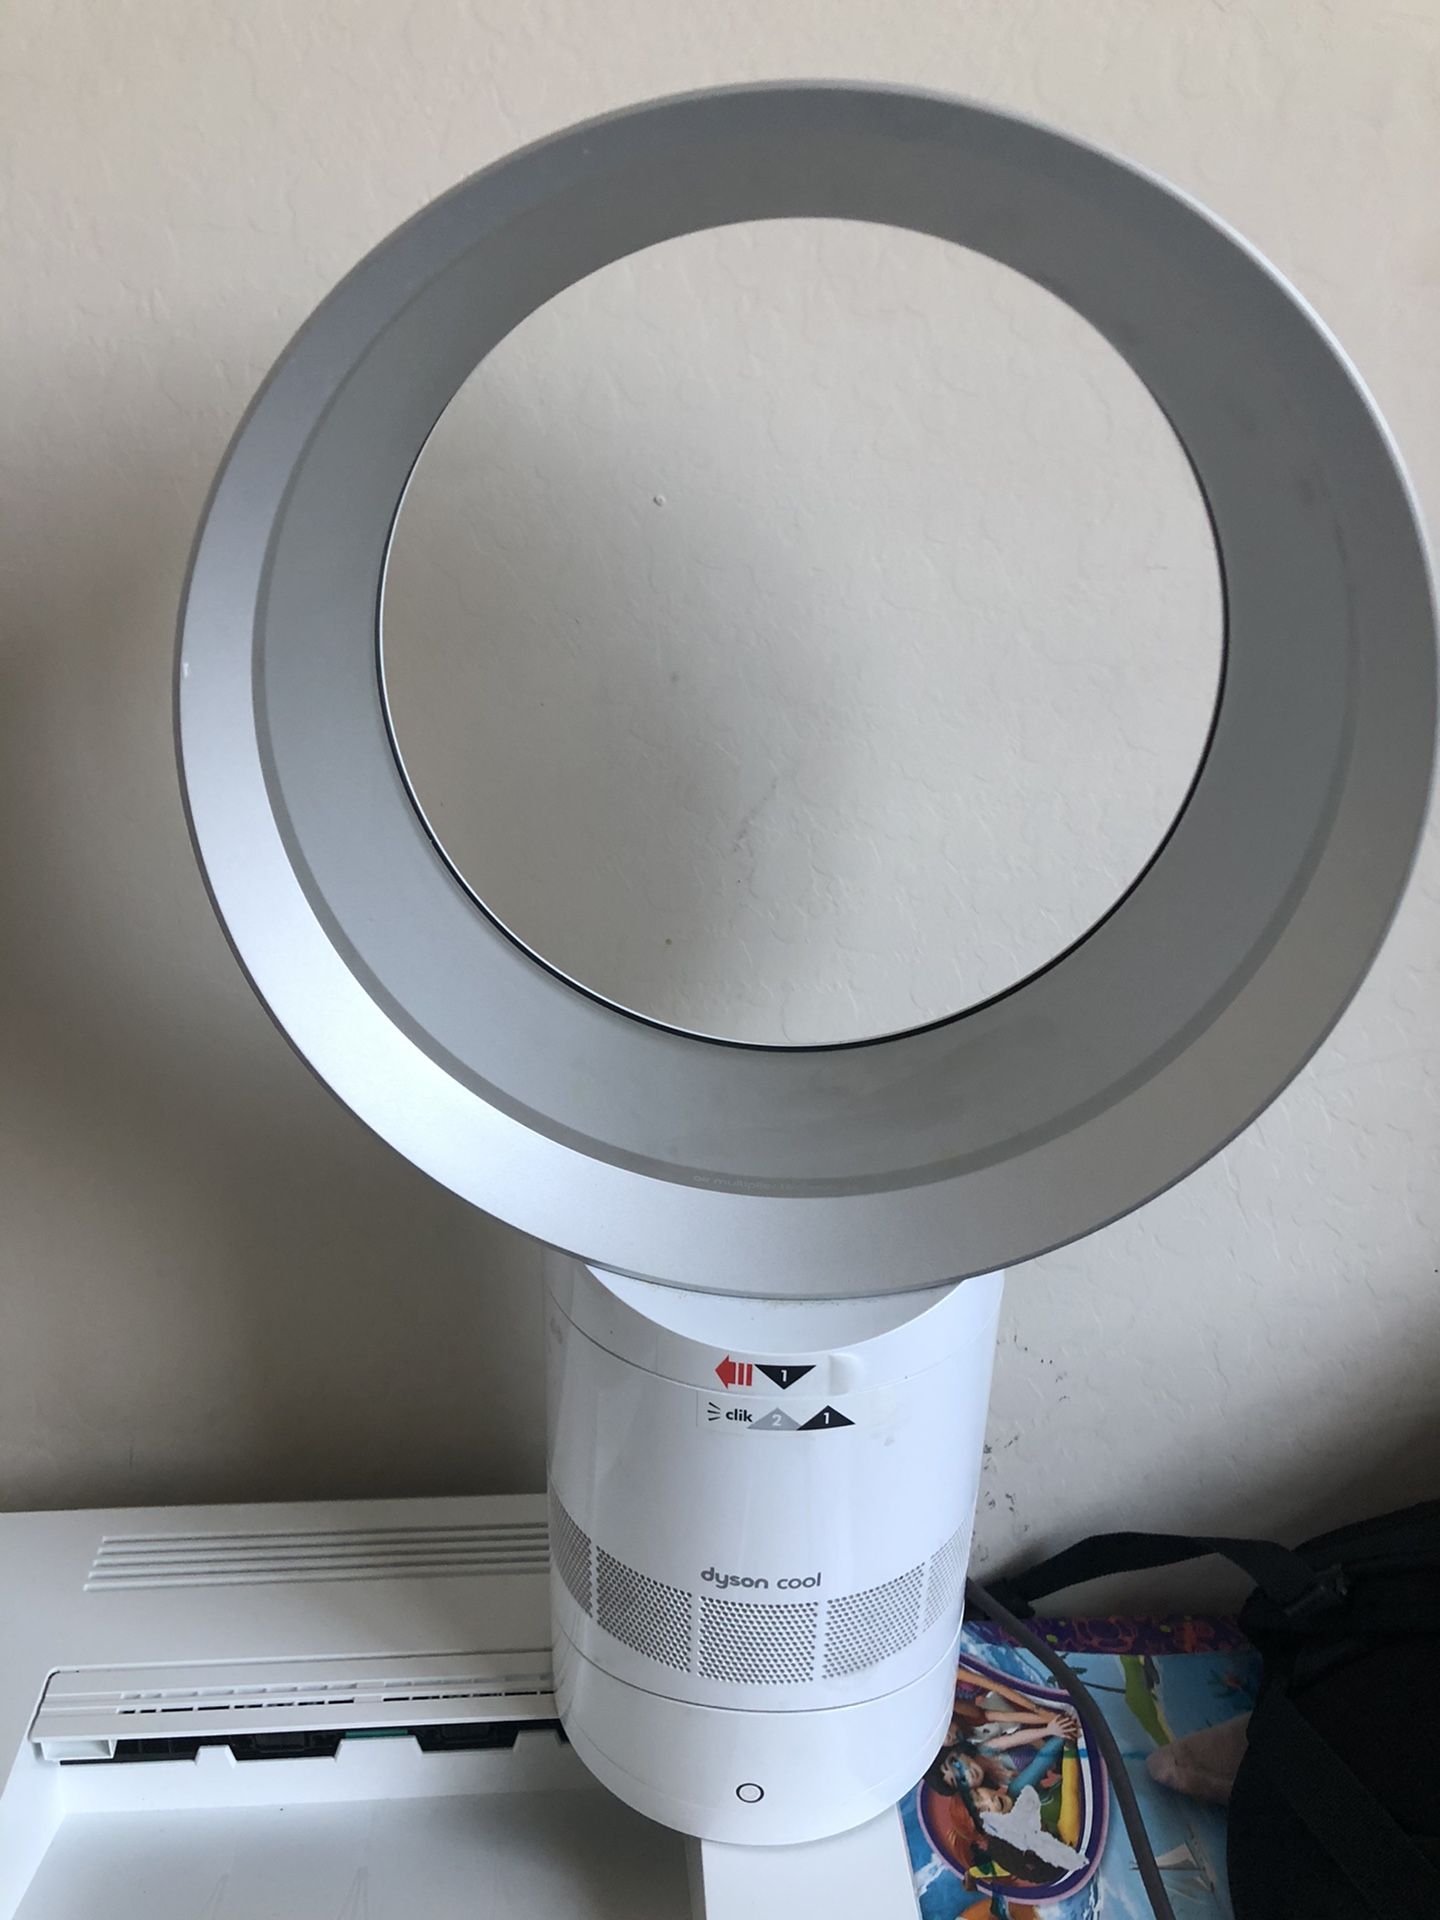 Dyson AM06 10" Cool Desk Fan with remote